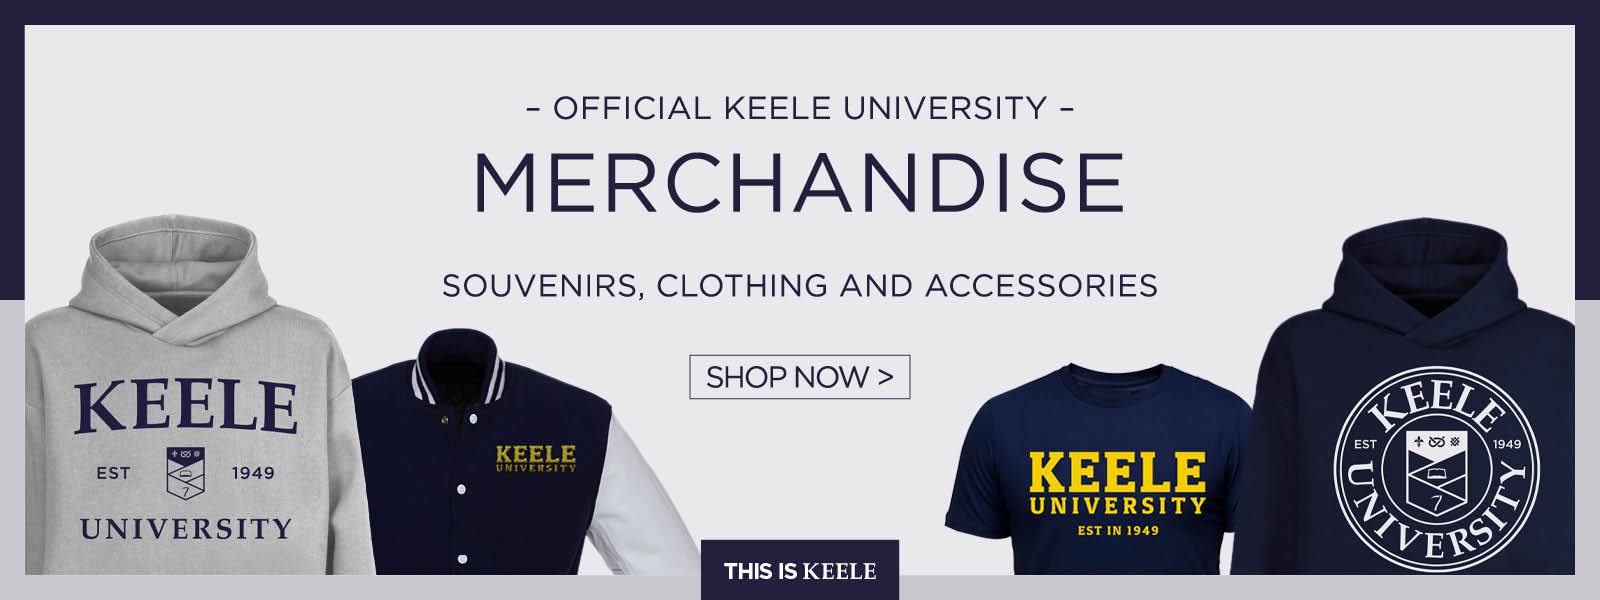 Merchandise at Keele University